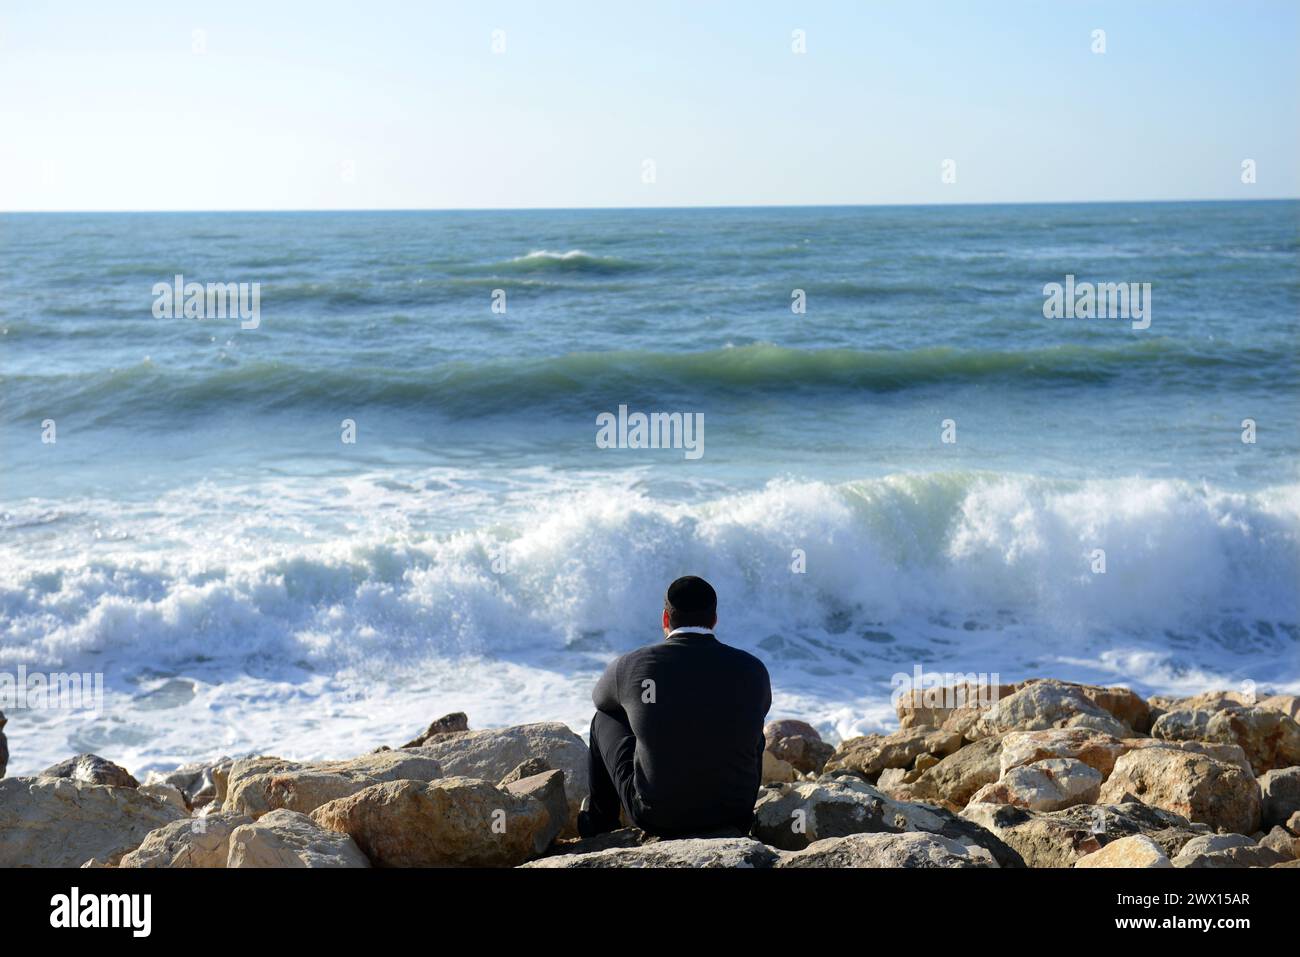 A man enjoying watching the waves in Tel-Aviv, Israel. Stock Photo